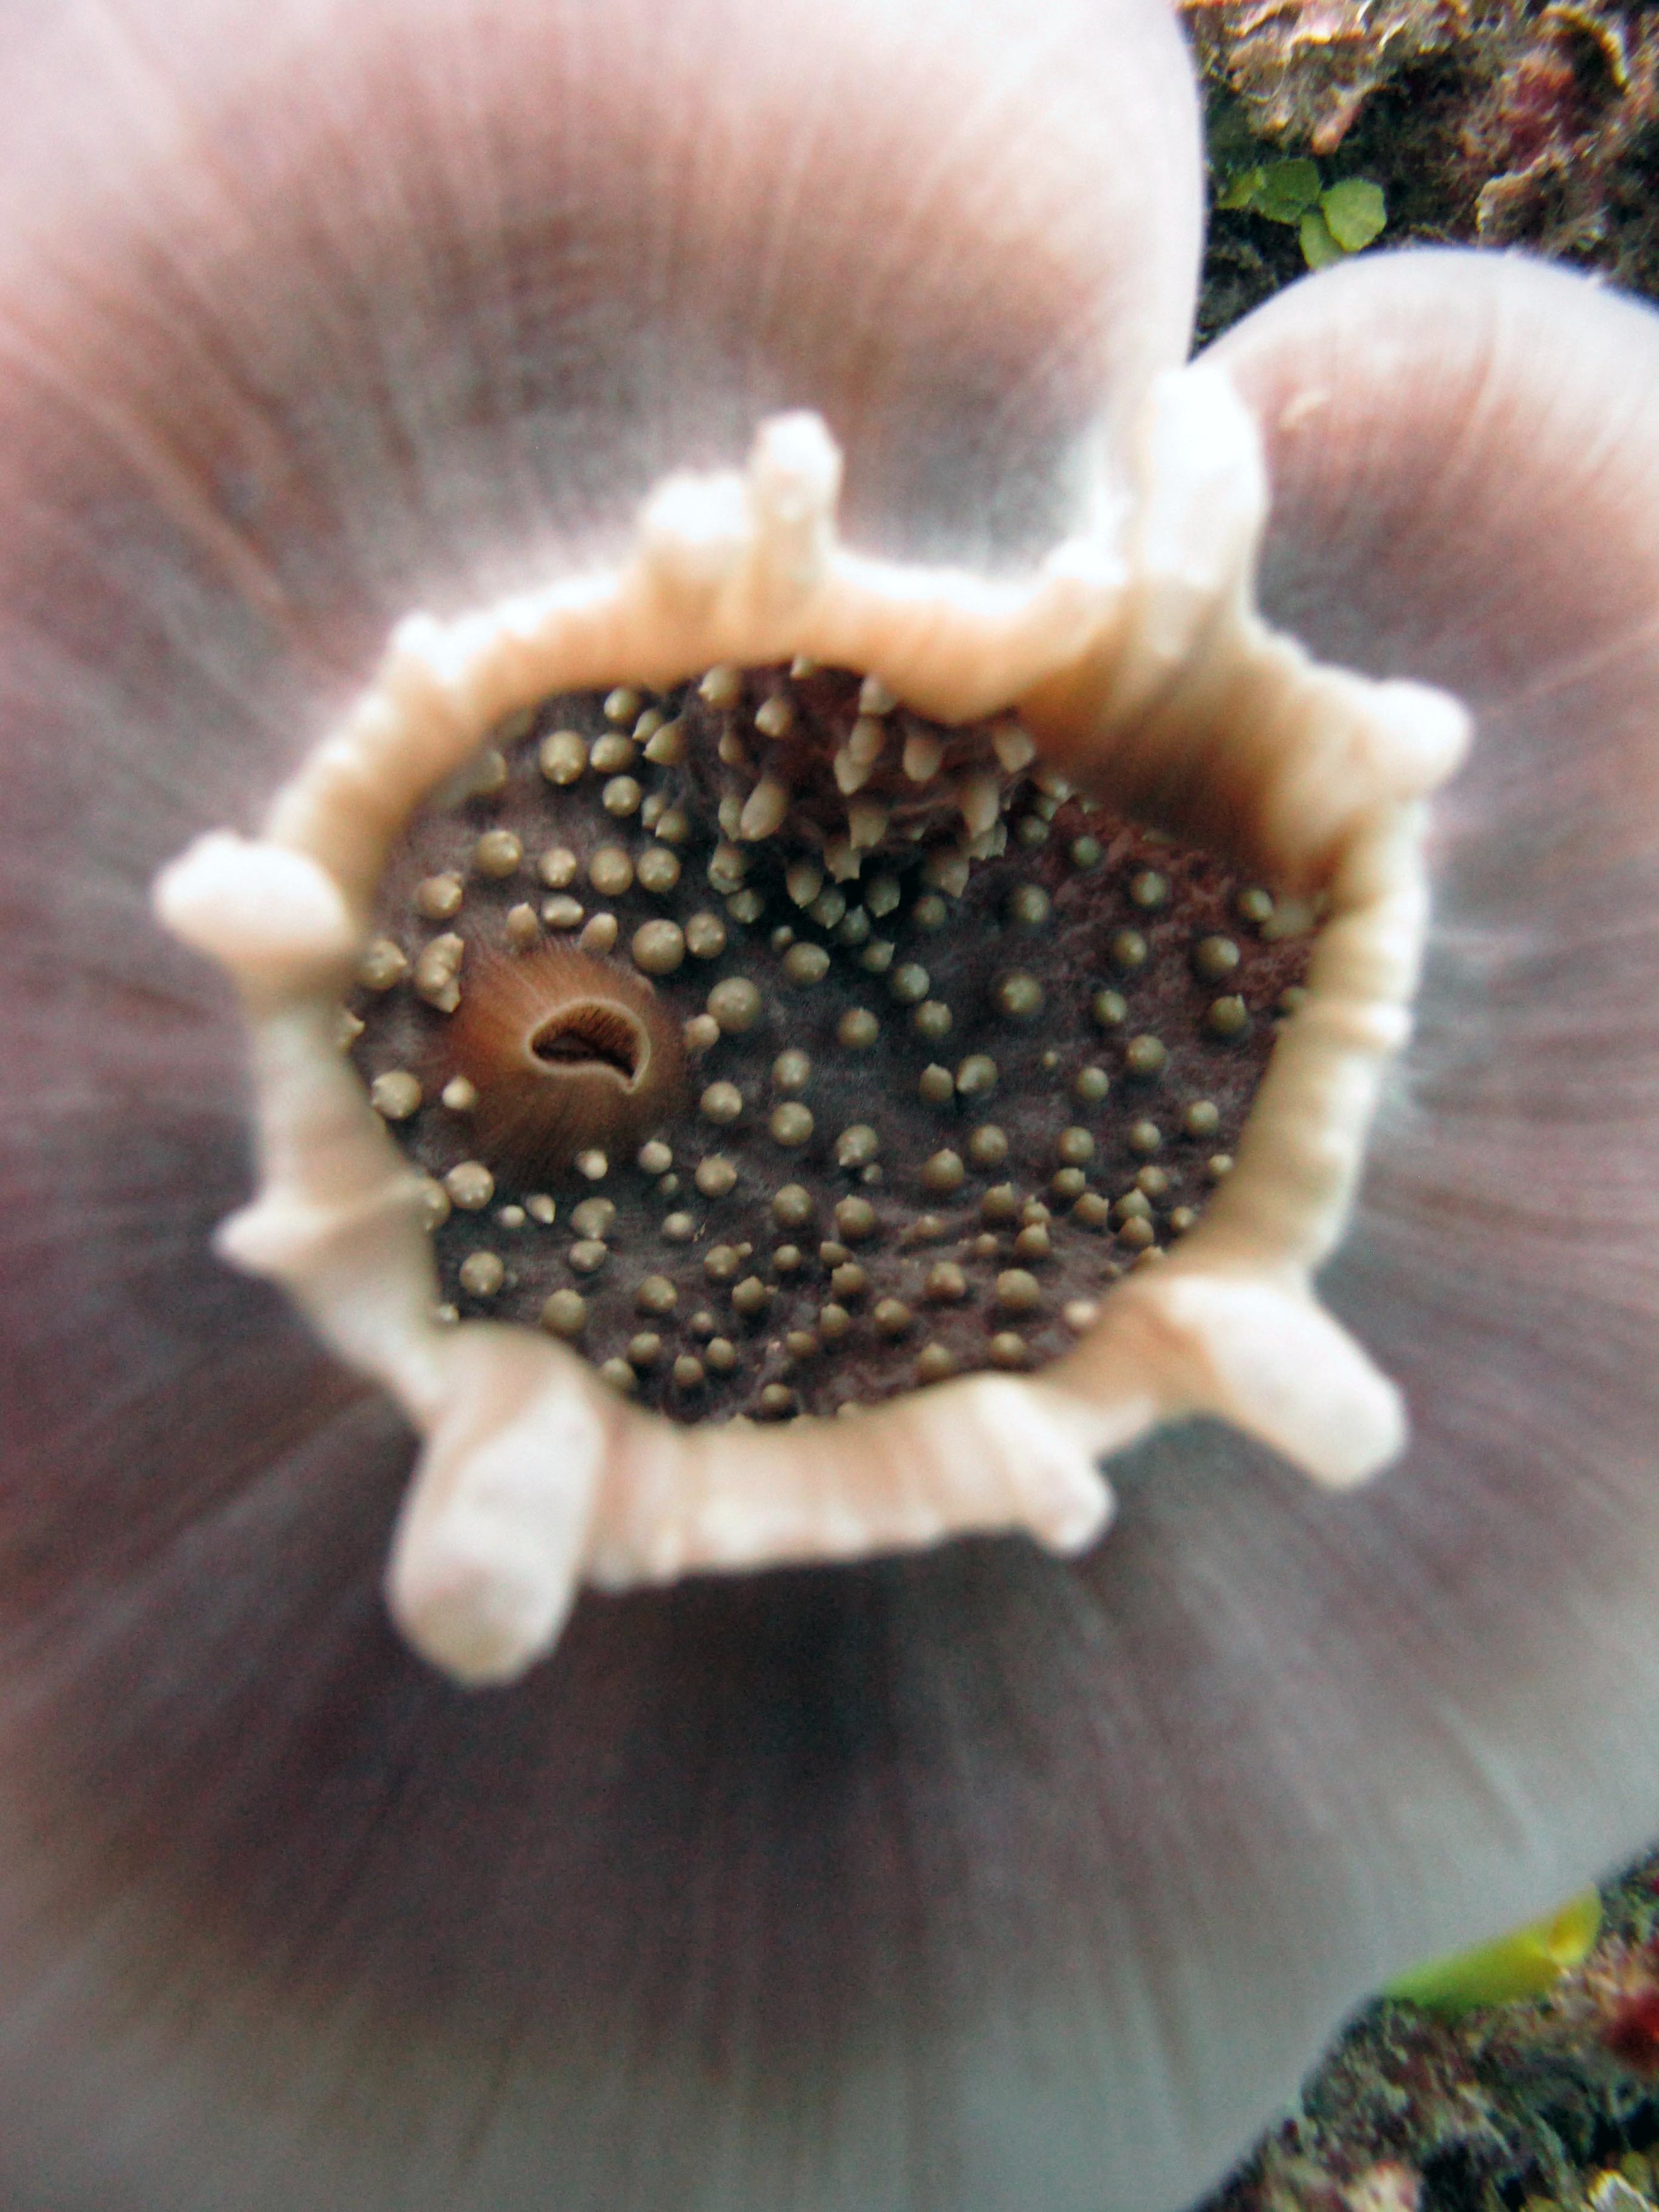 inside the anemone.jpg